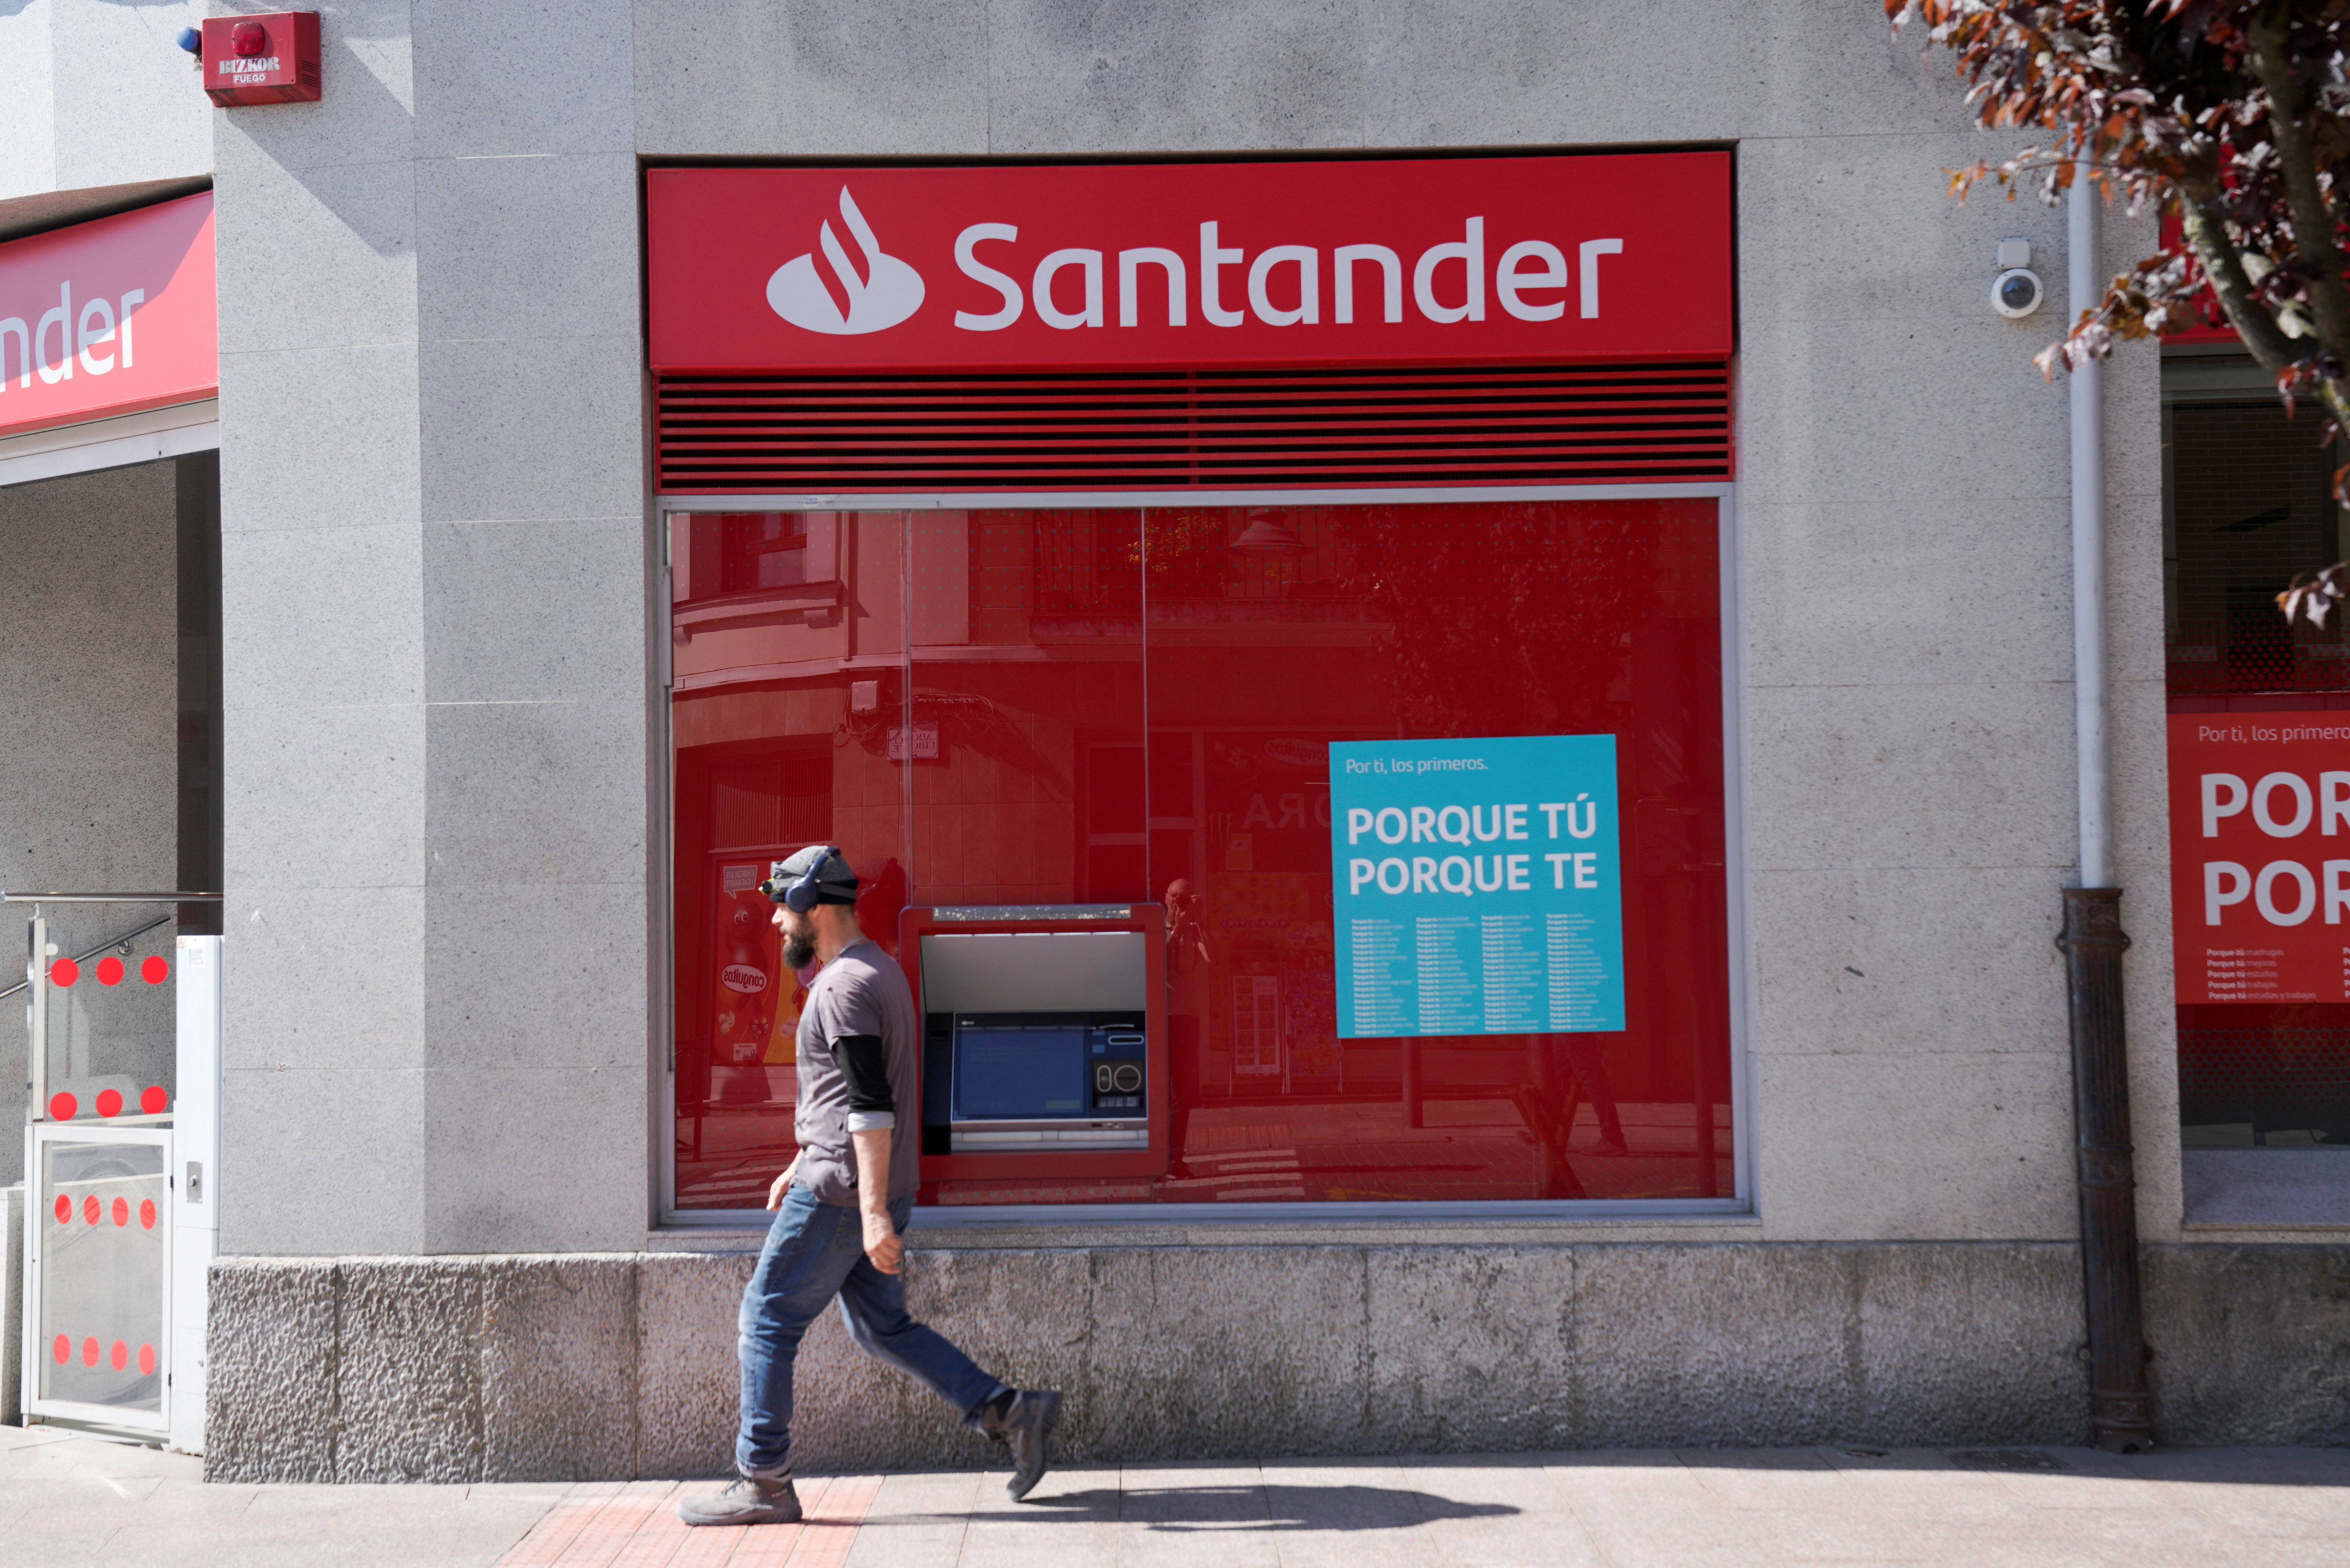 Santander bank branch in Guernica